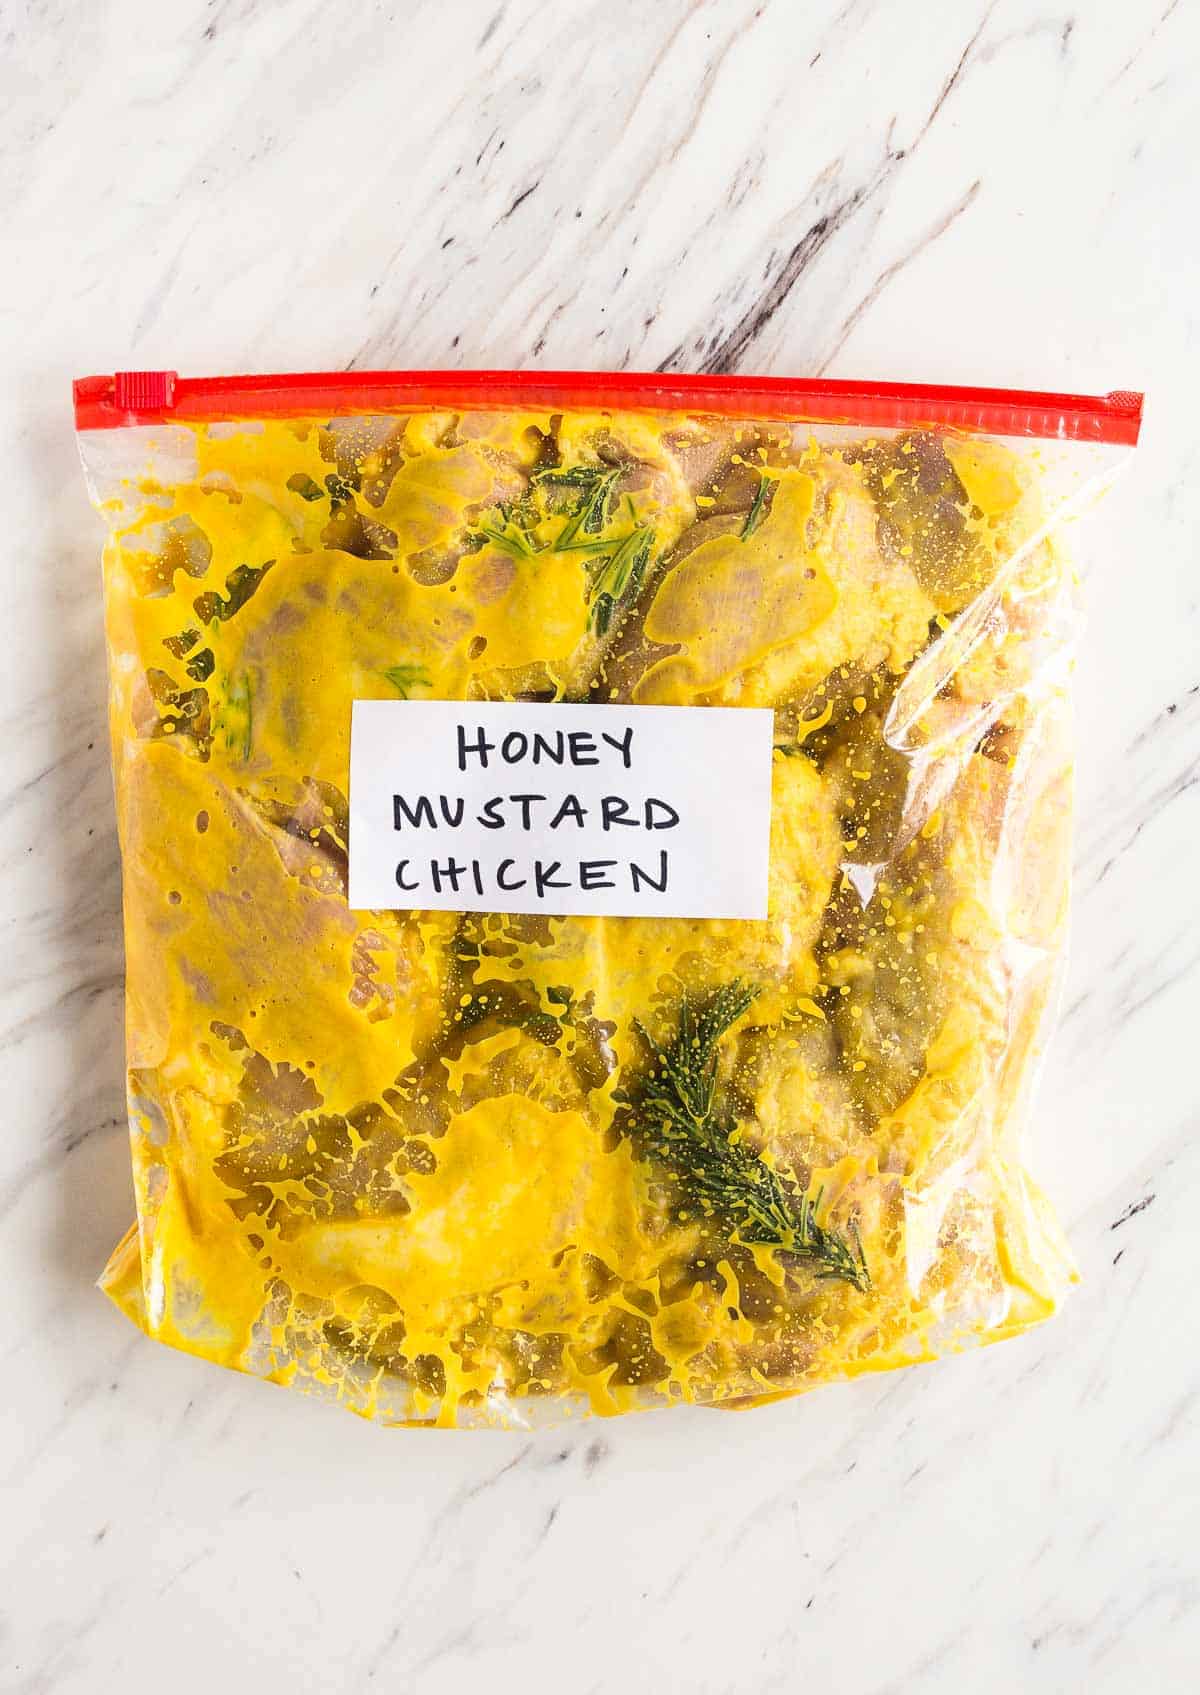 Chicken marinating in honey mustard in freezer bag.